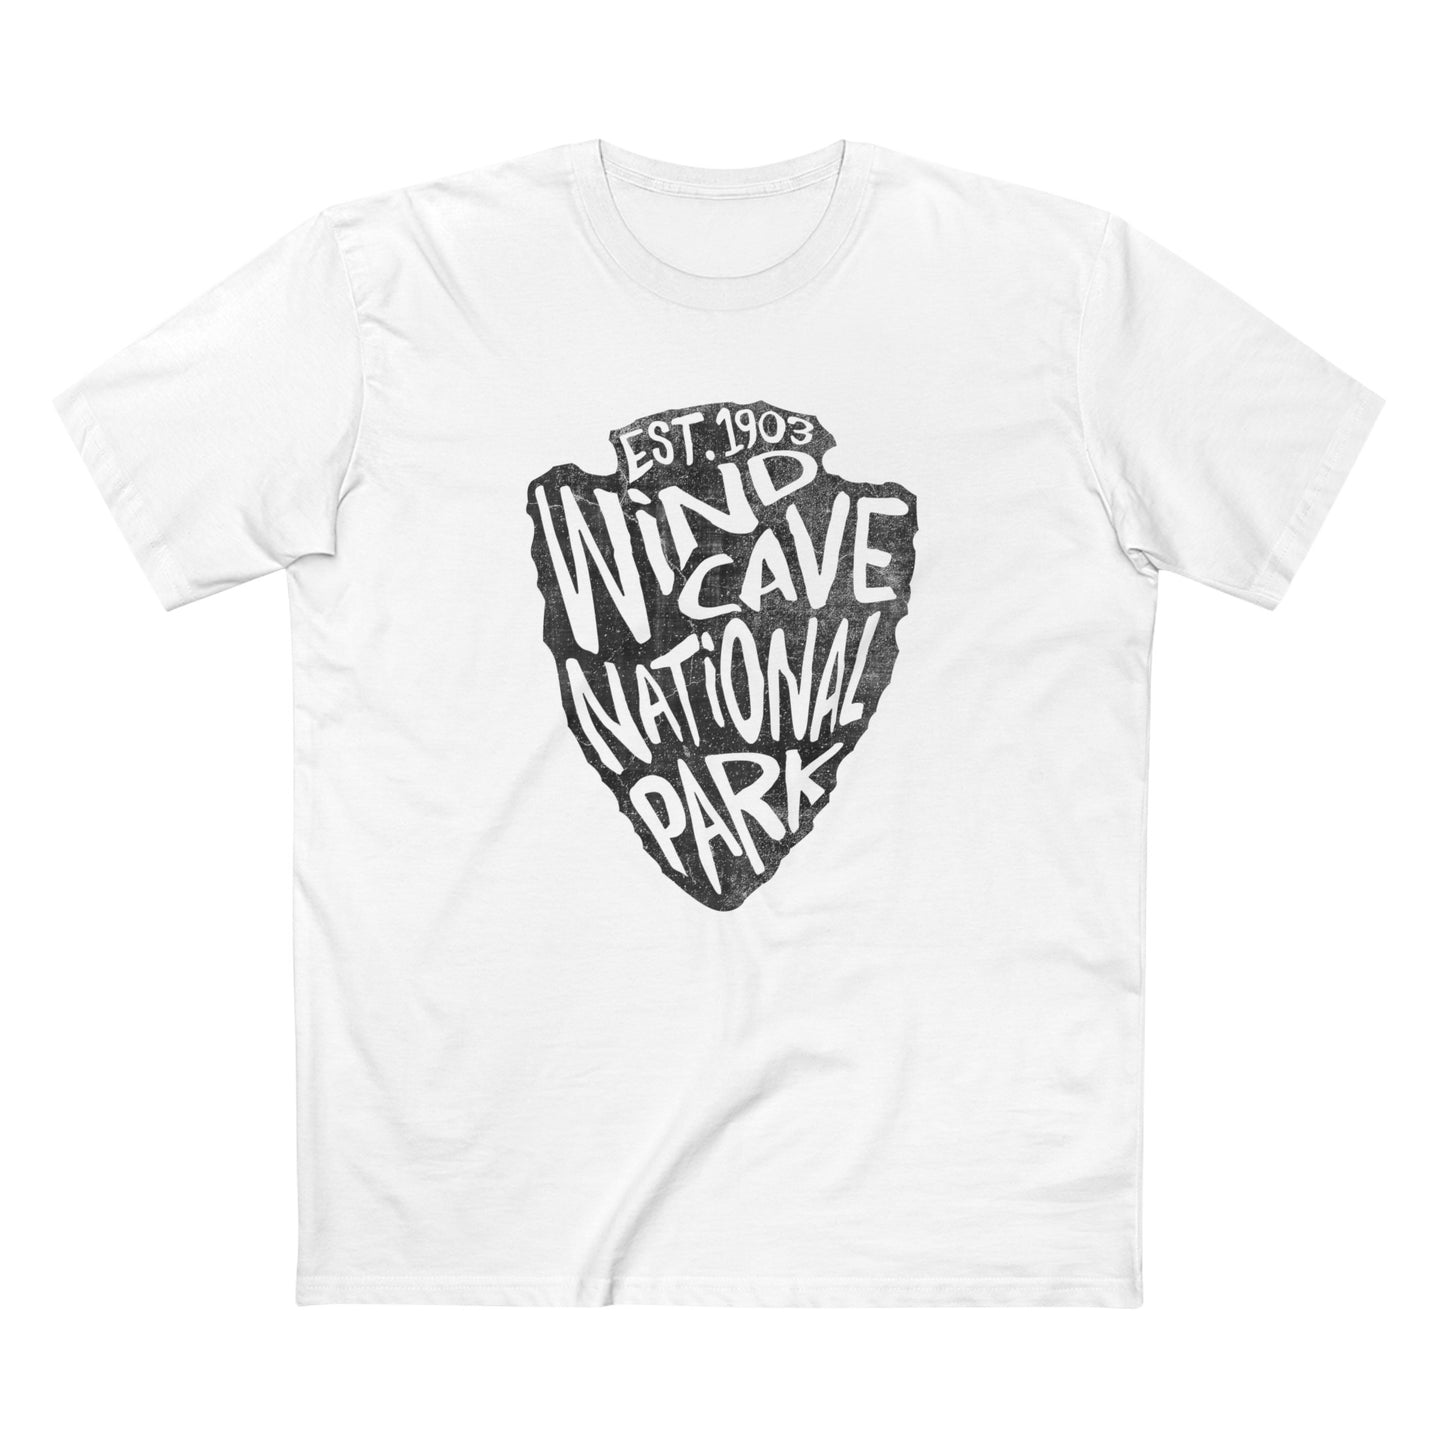 Wind Cave National Park T-Shirt - Arrow Head Design